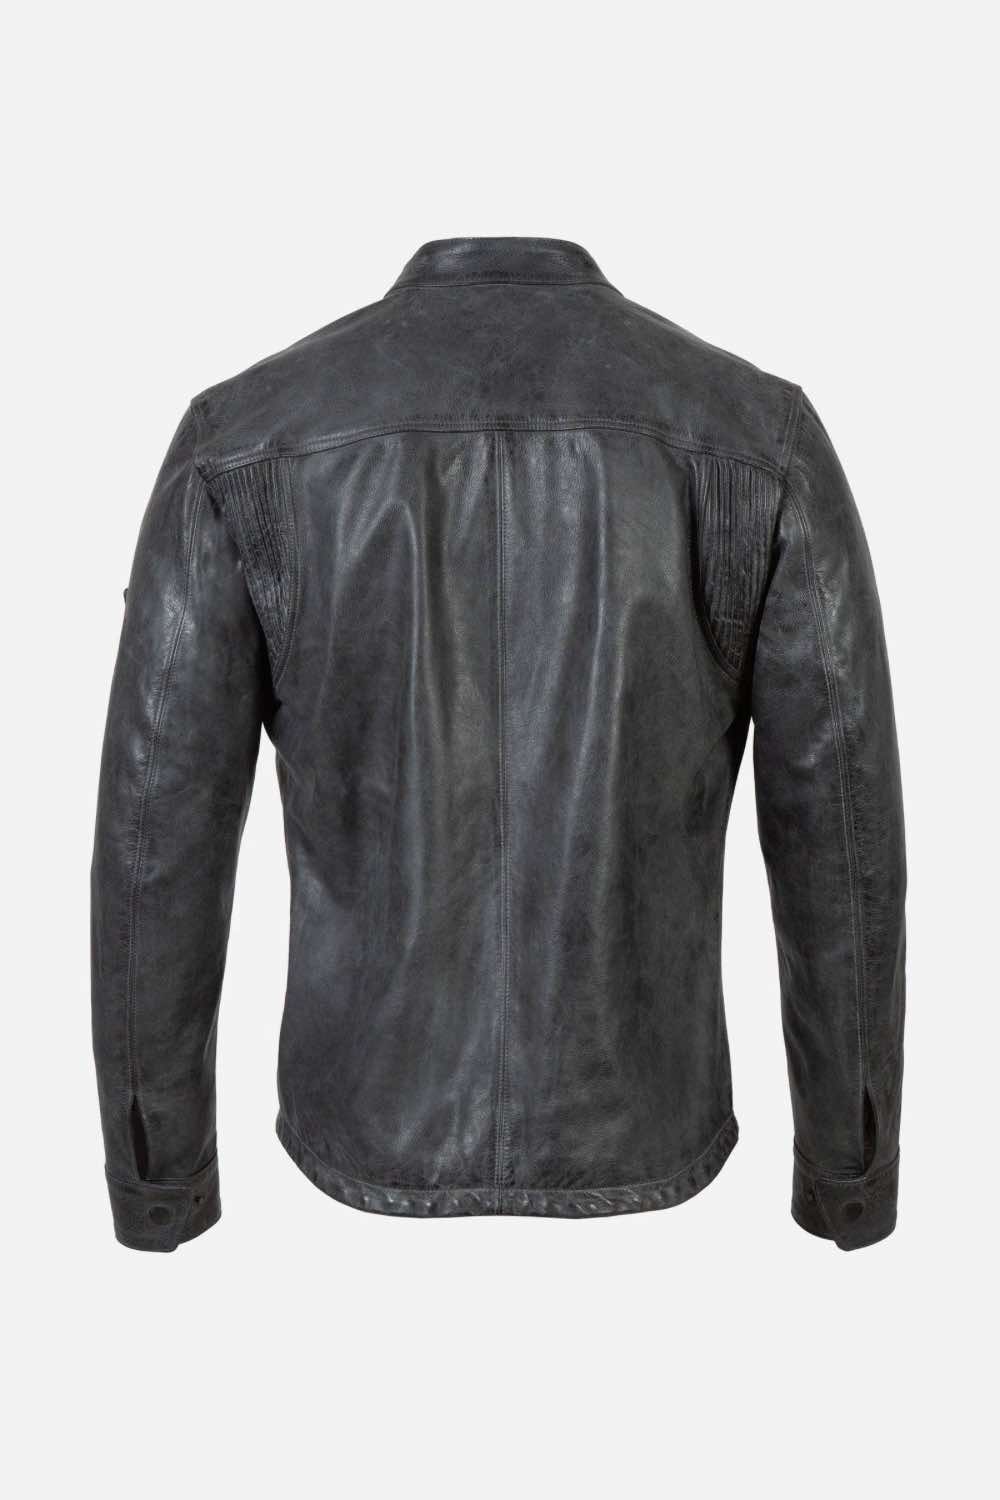 Matchless Shoreditch Shirt Men's Leather Jacket Antique Black - Back View